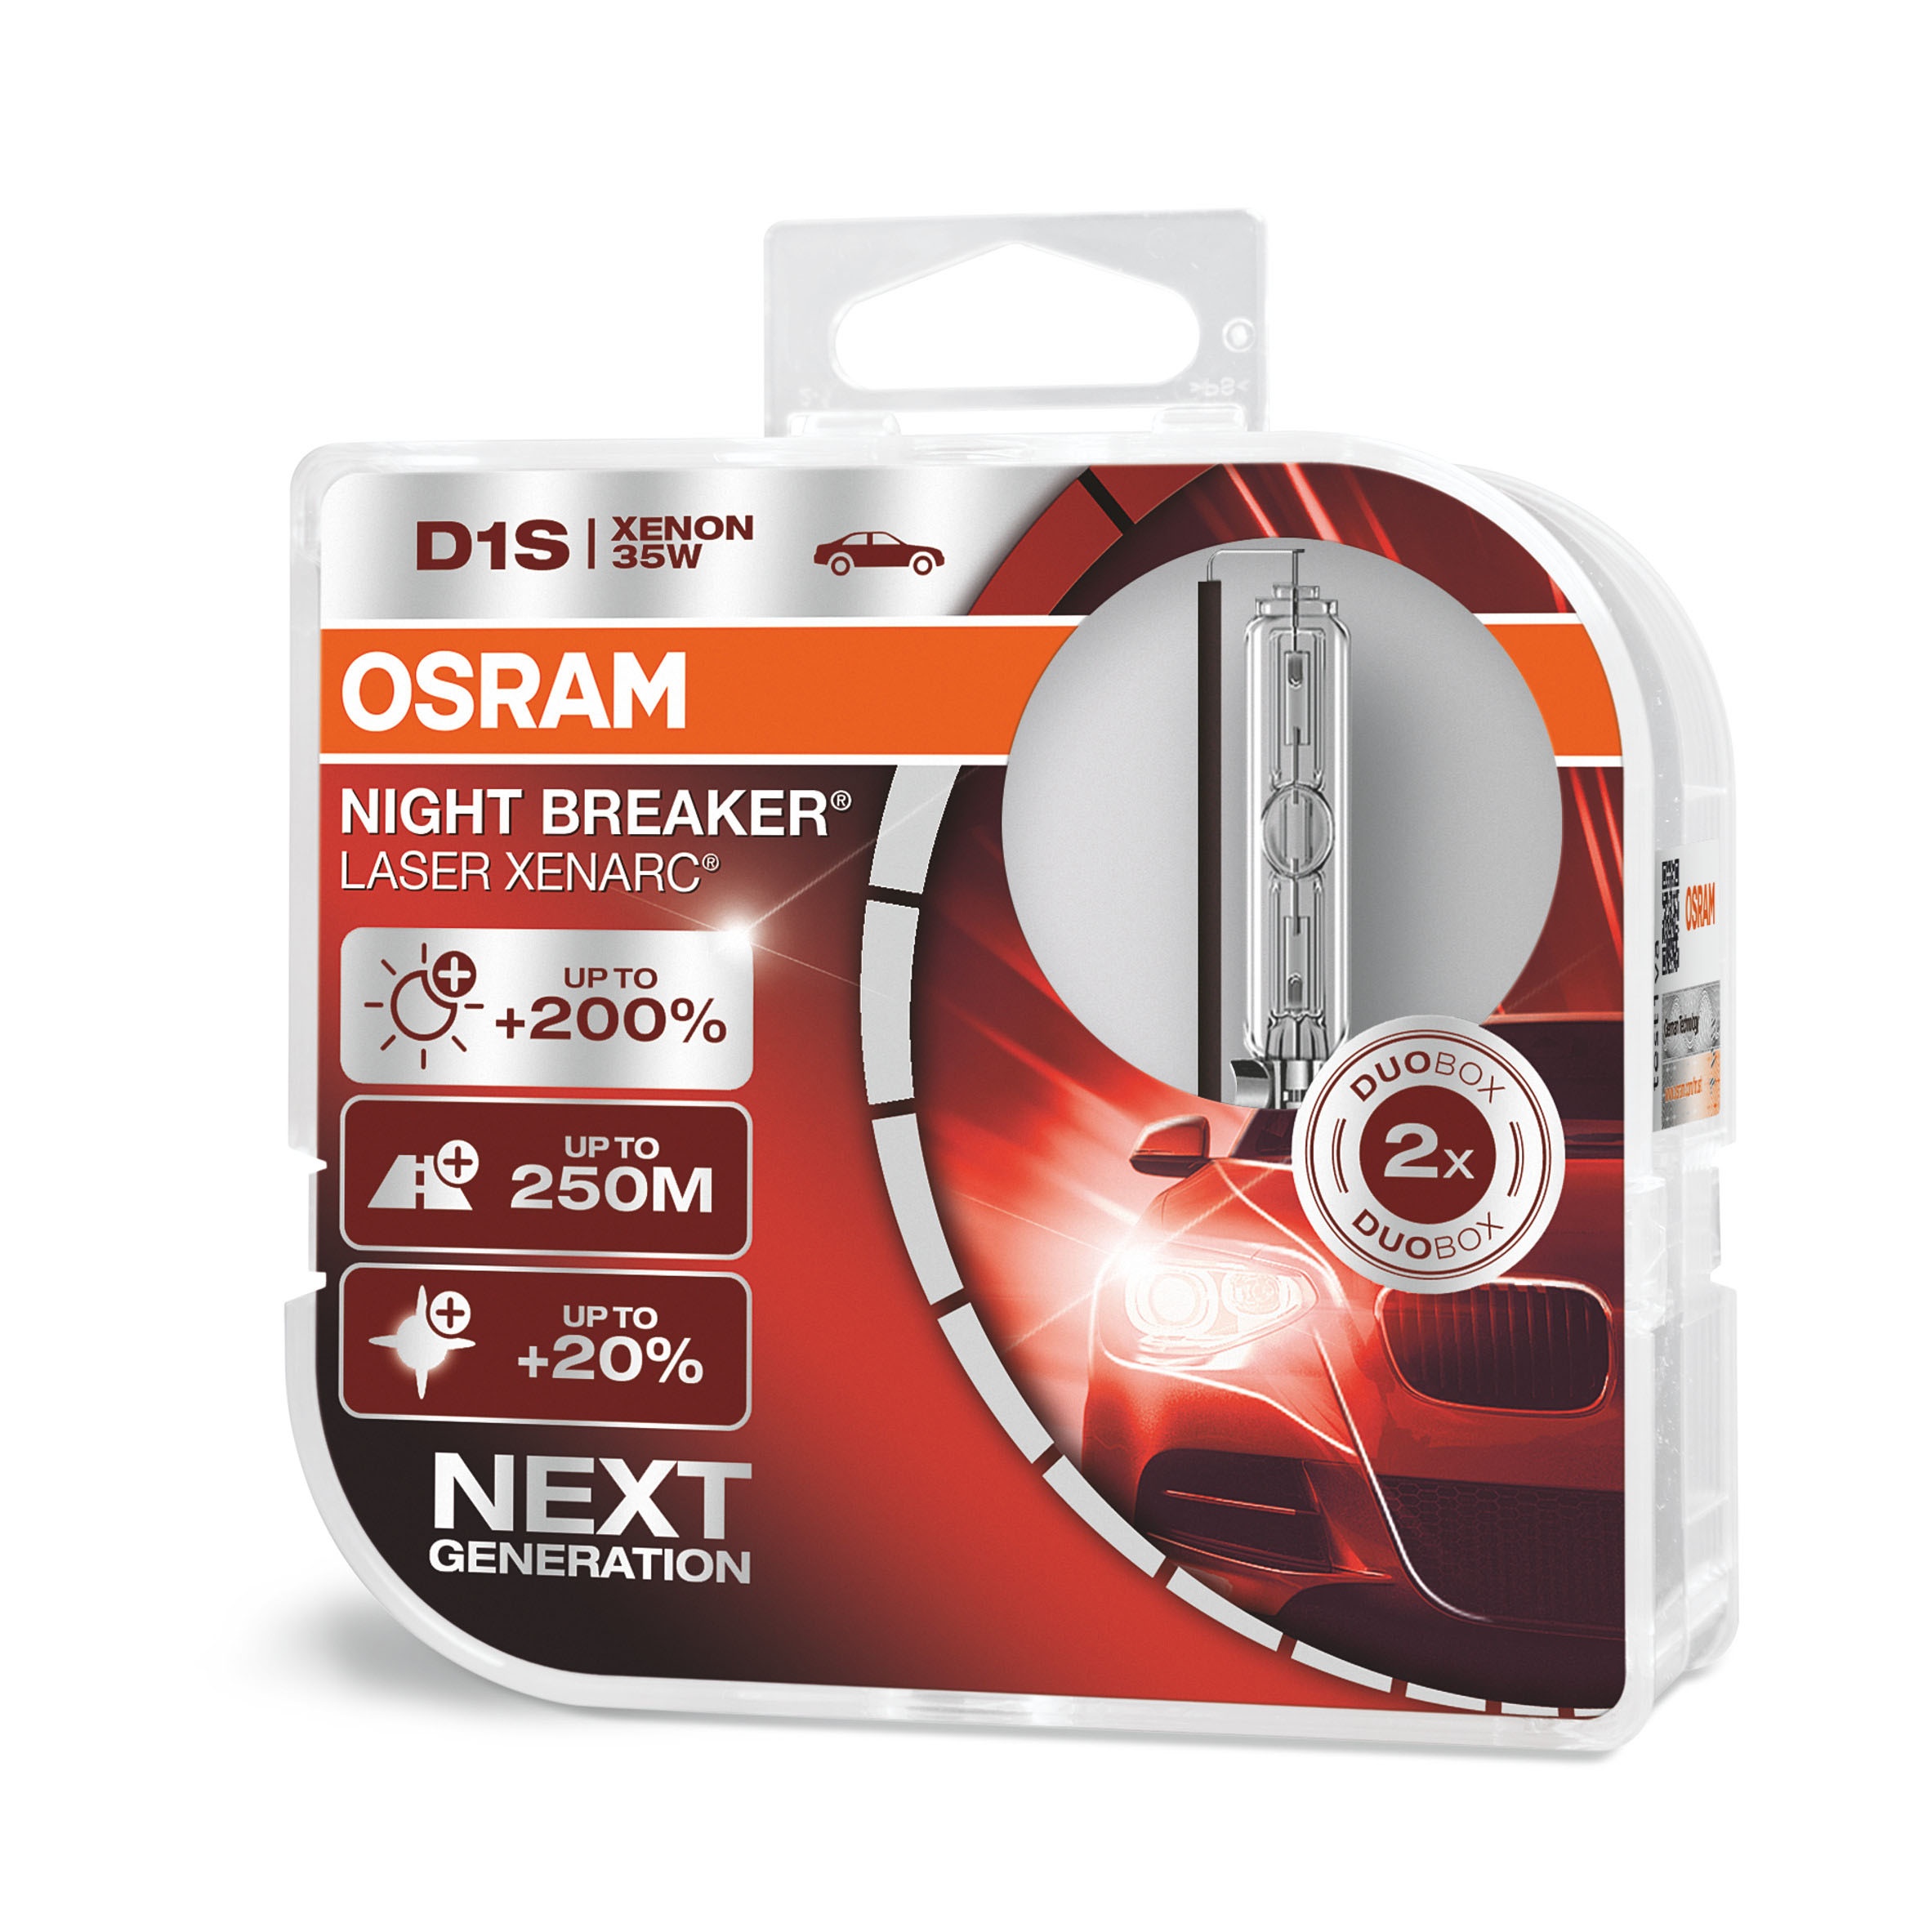 OSRAM Night Breaker LASER NEXT GENERATION 2018 Street and uphill road test  